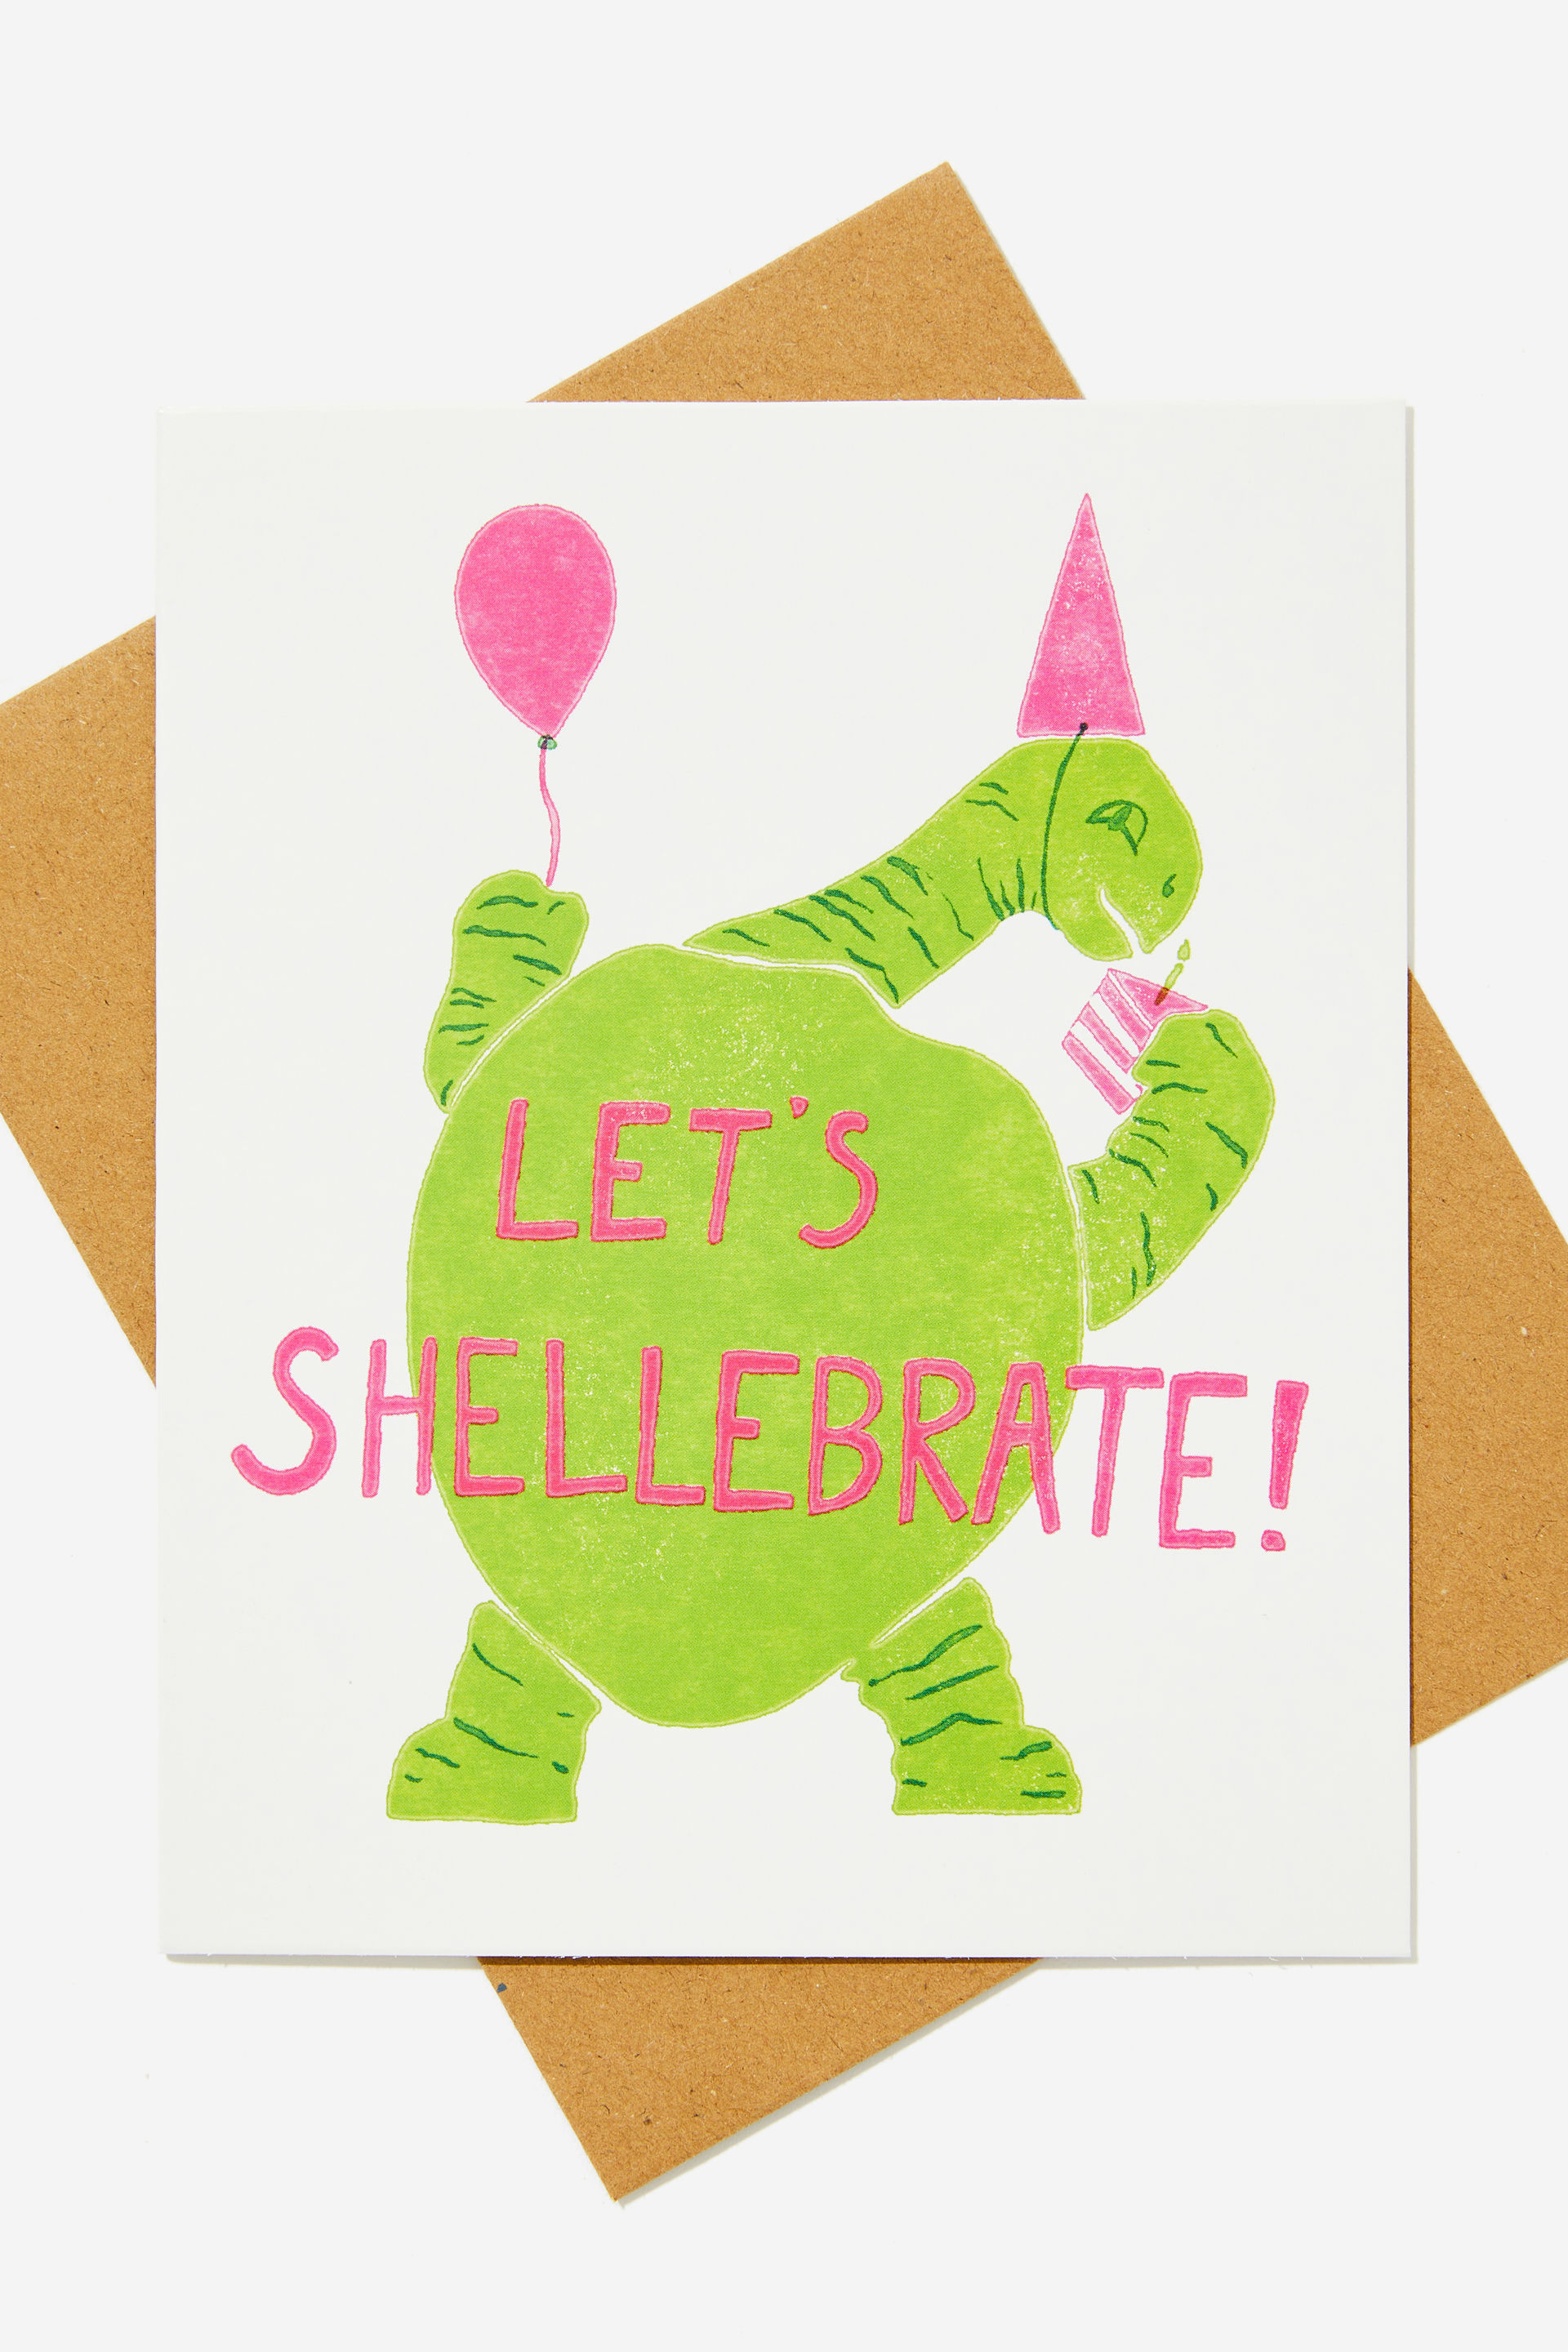 Typo - Nice Birthday Card - Let’s shellebrate